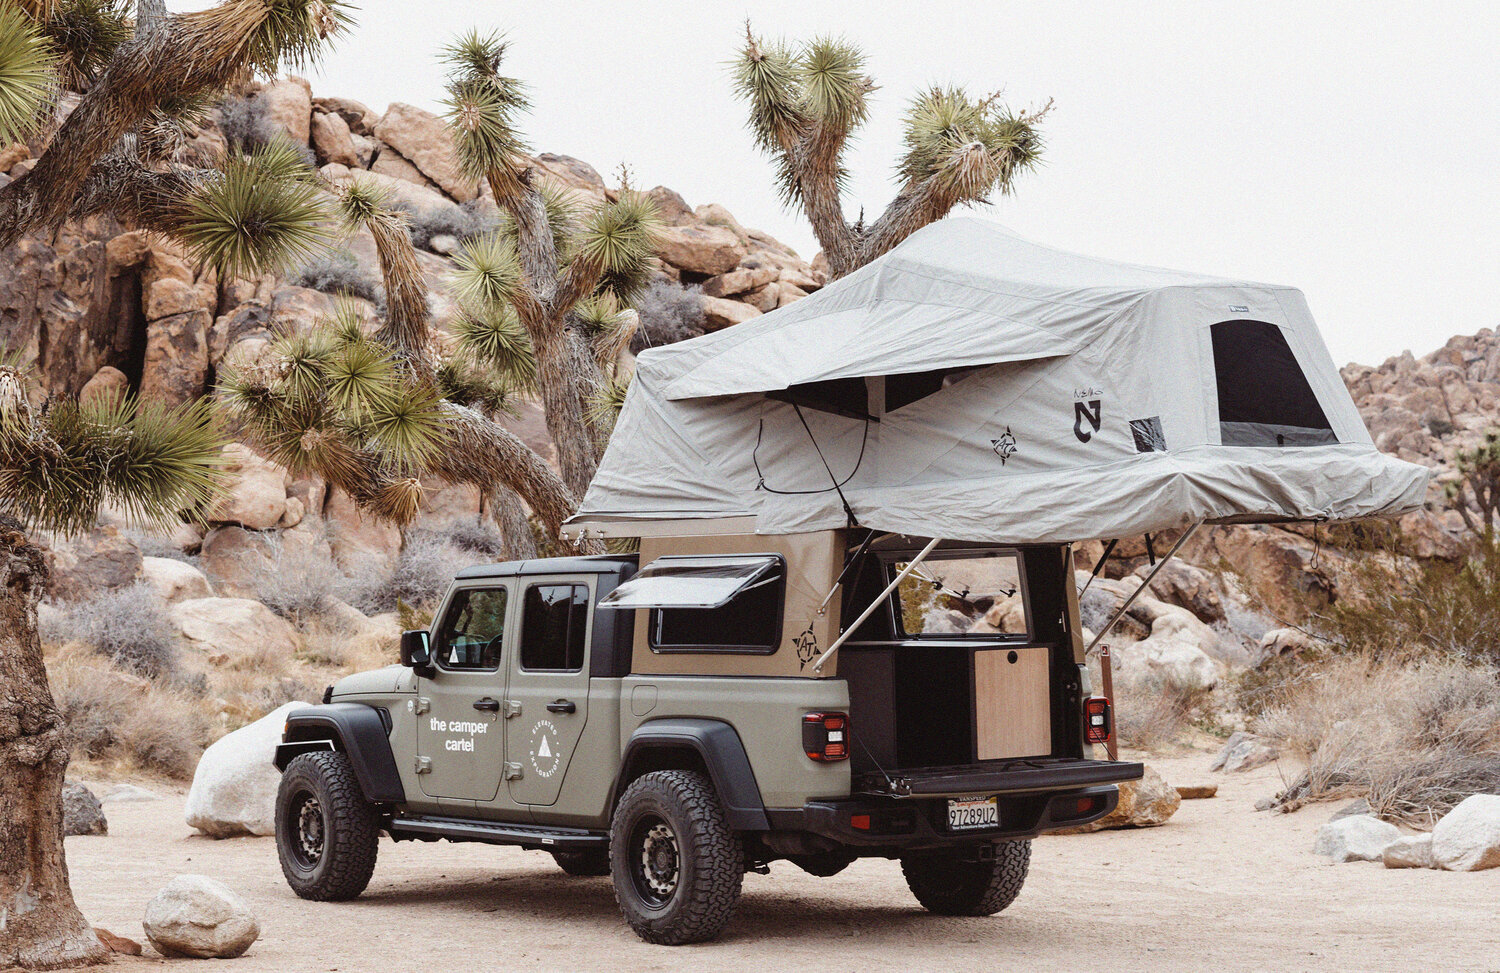 s-wc-safari-20-Jeep-Gladiator-4x4-campervan-camper-cartel-exterior-expanded.jpg